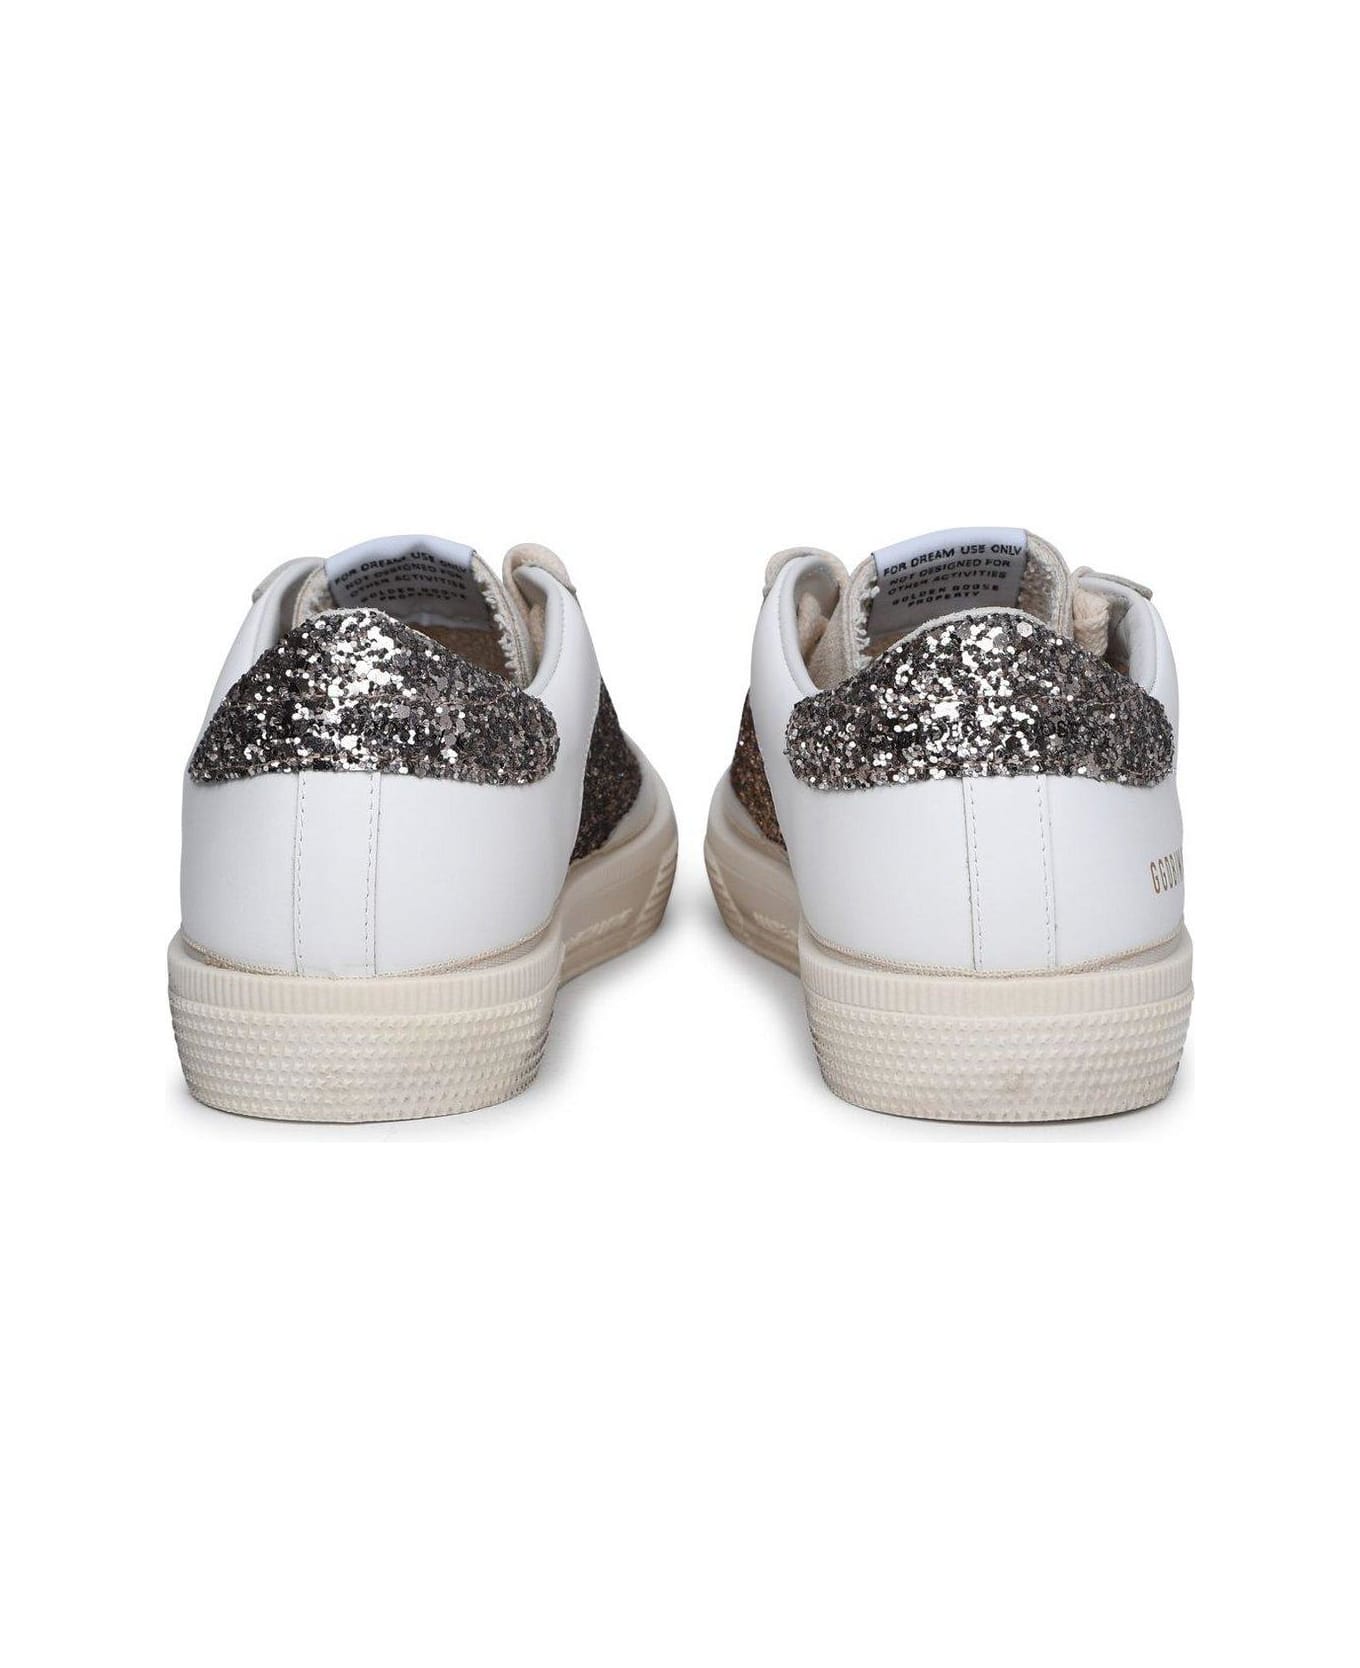 Golden Goose N May Star Glittered Sneakers - Optic white シューズ